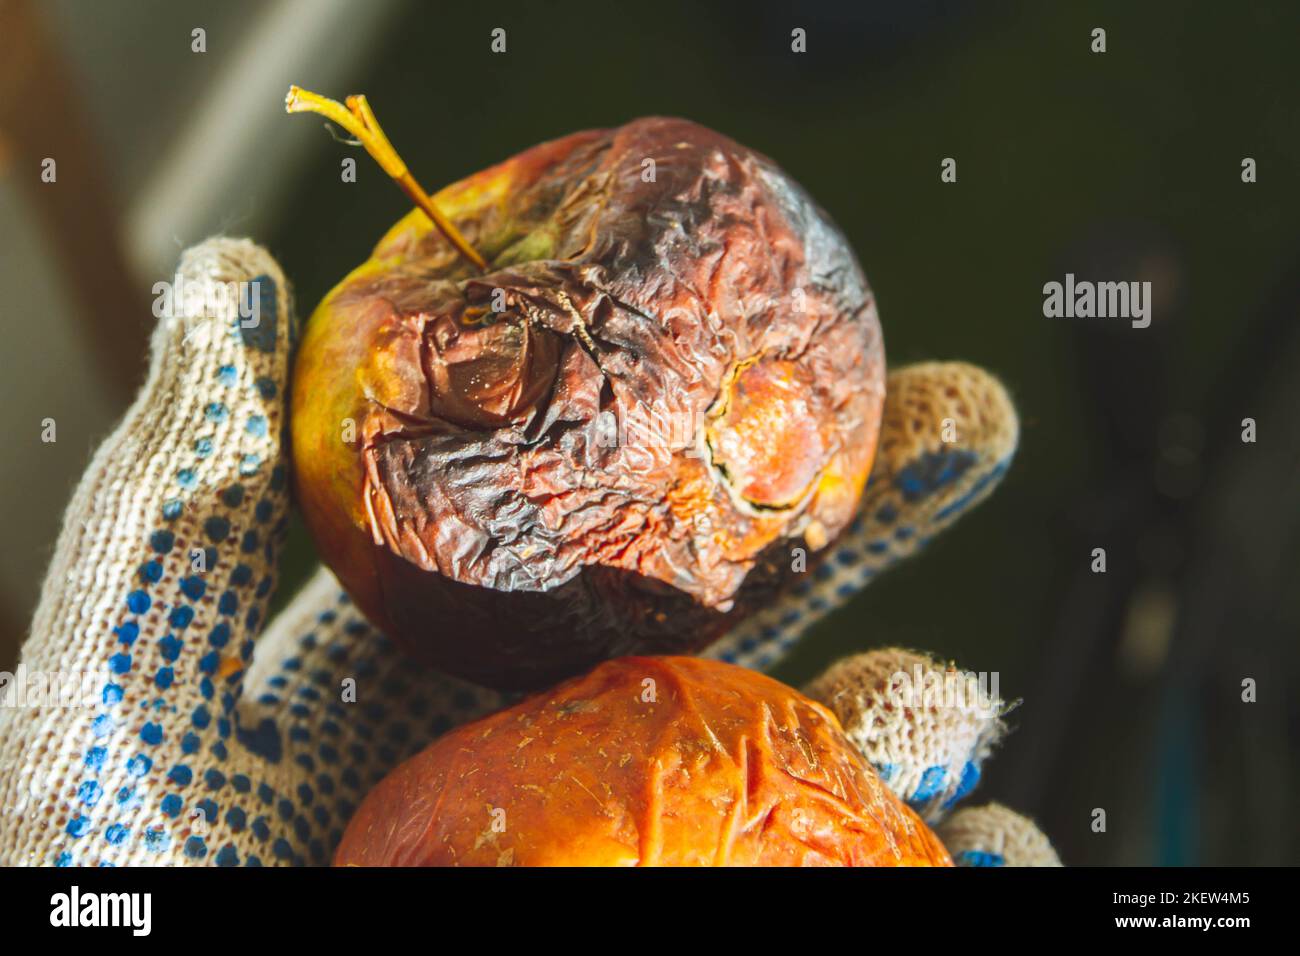 Rotten apple in sun. Rotting fruit. Diseases of apple fruit. Pest control.. Stock Photo